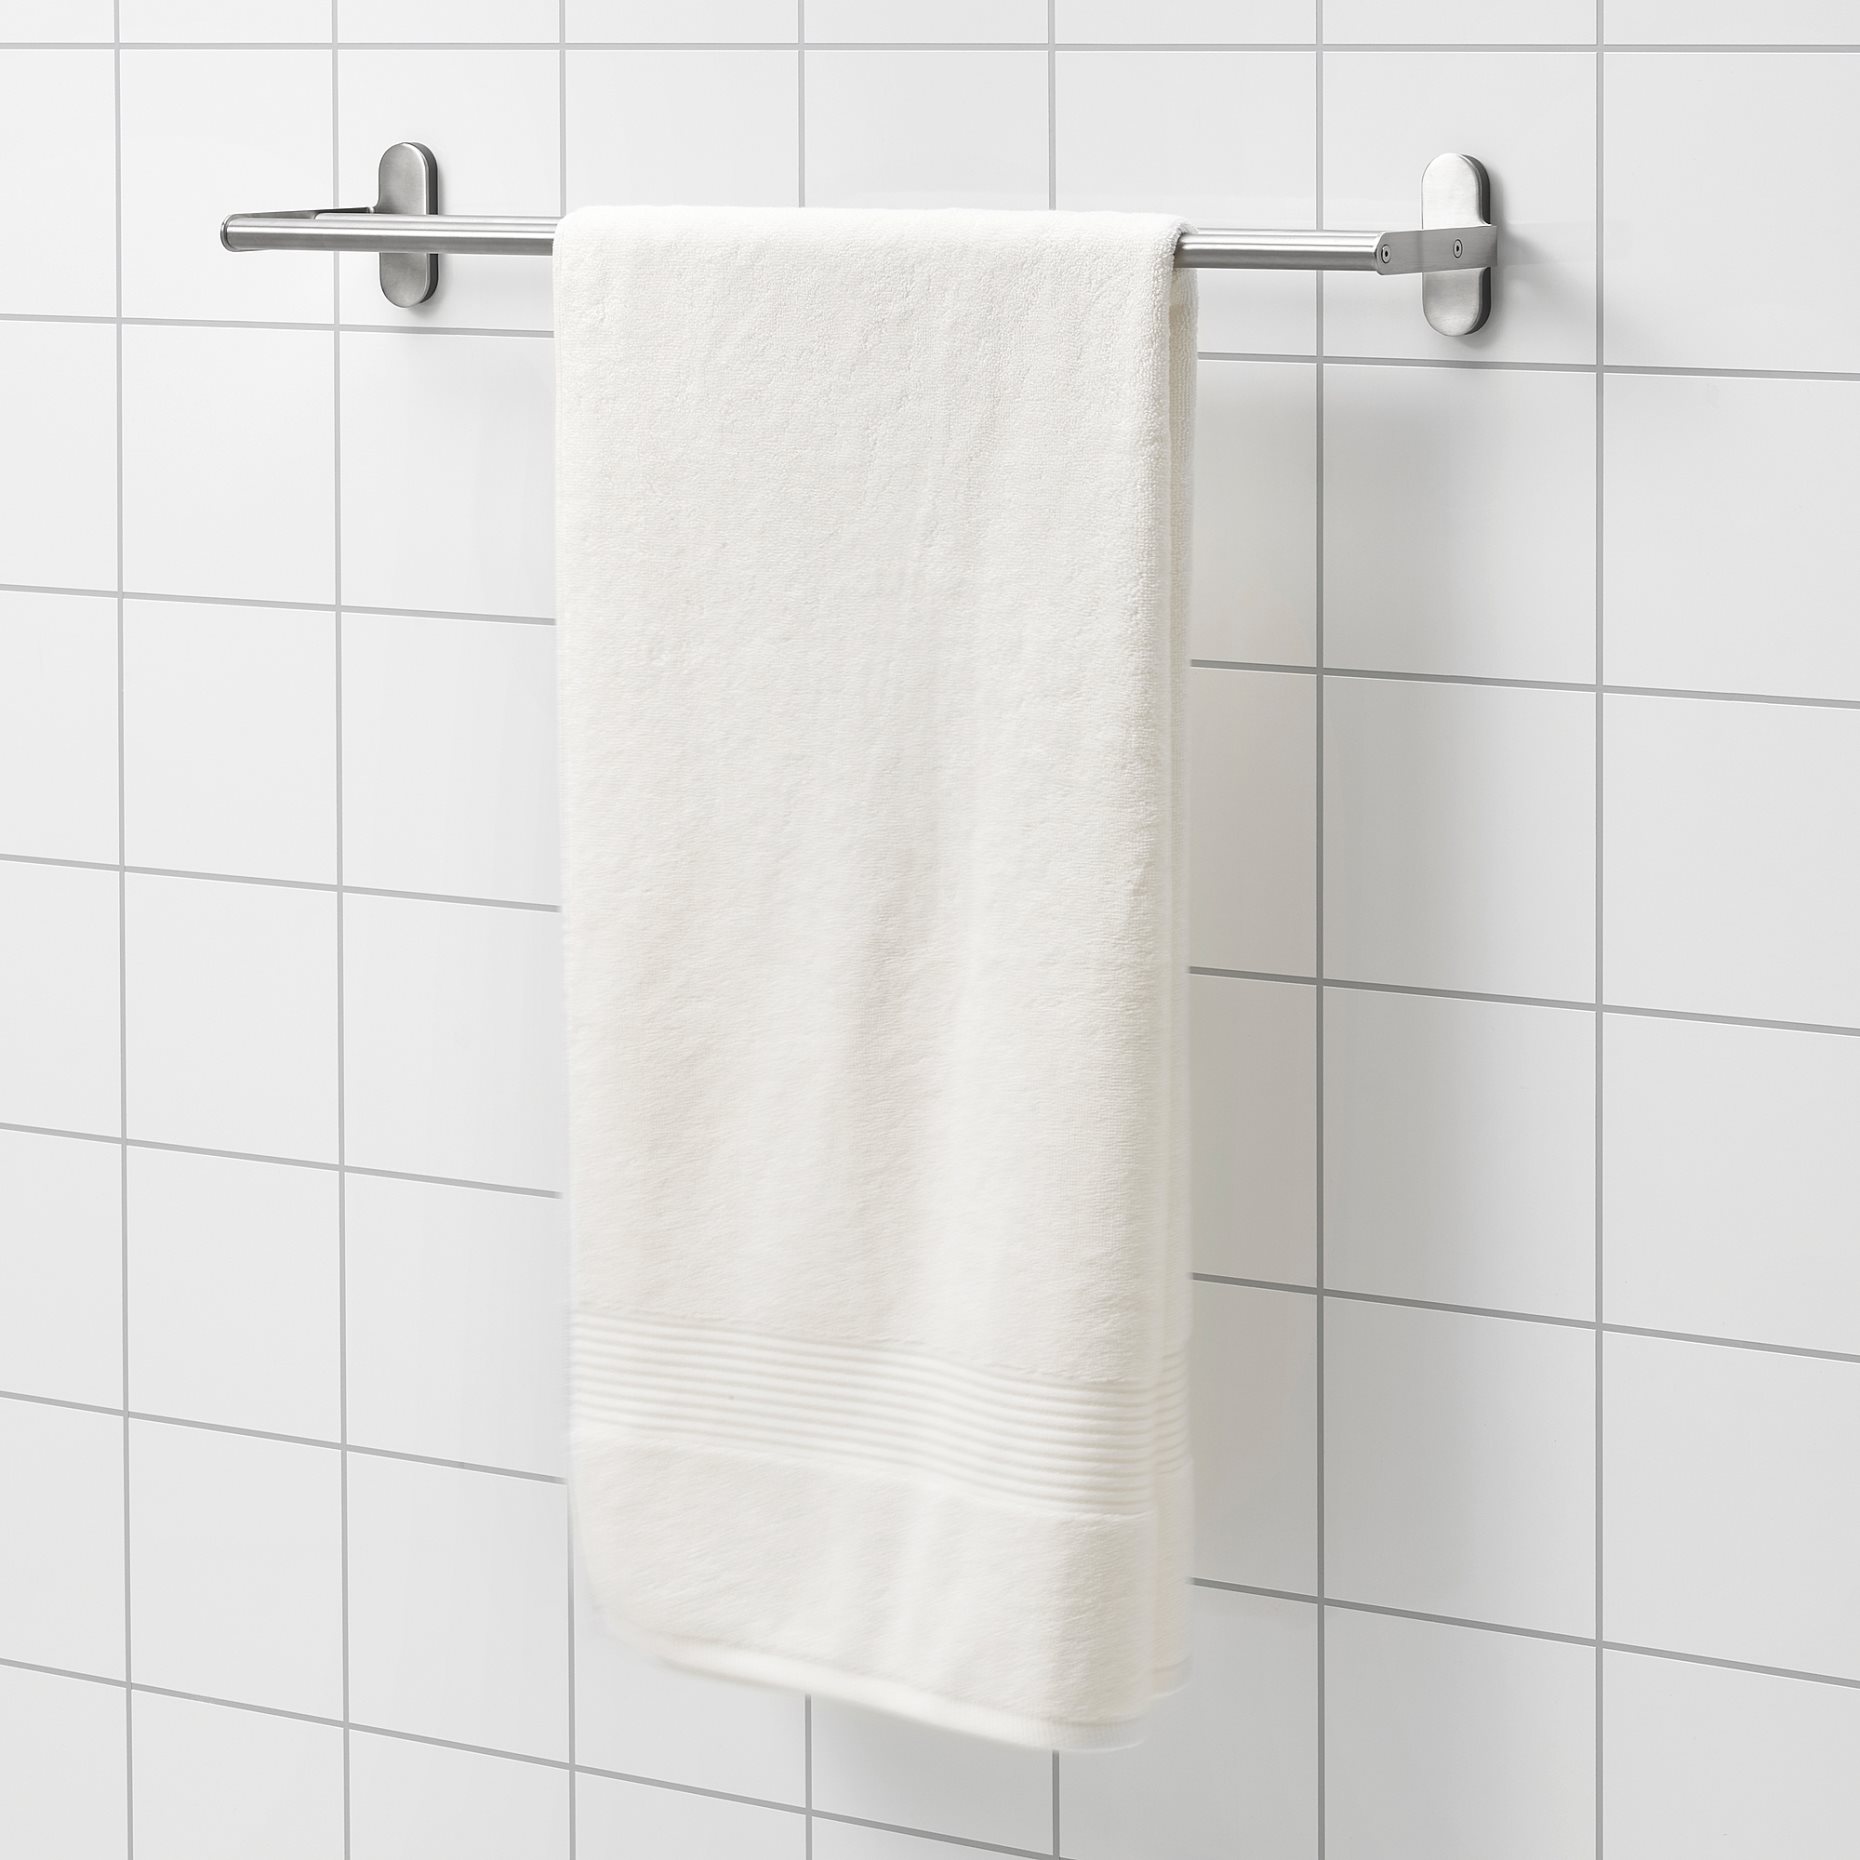 FREDRIKSJÖN, bath towel, 70x140 cm, 004.967.17